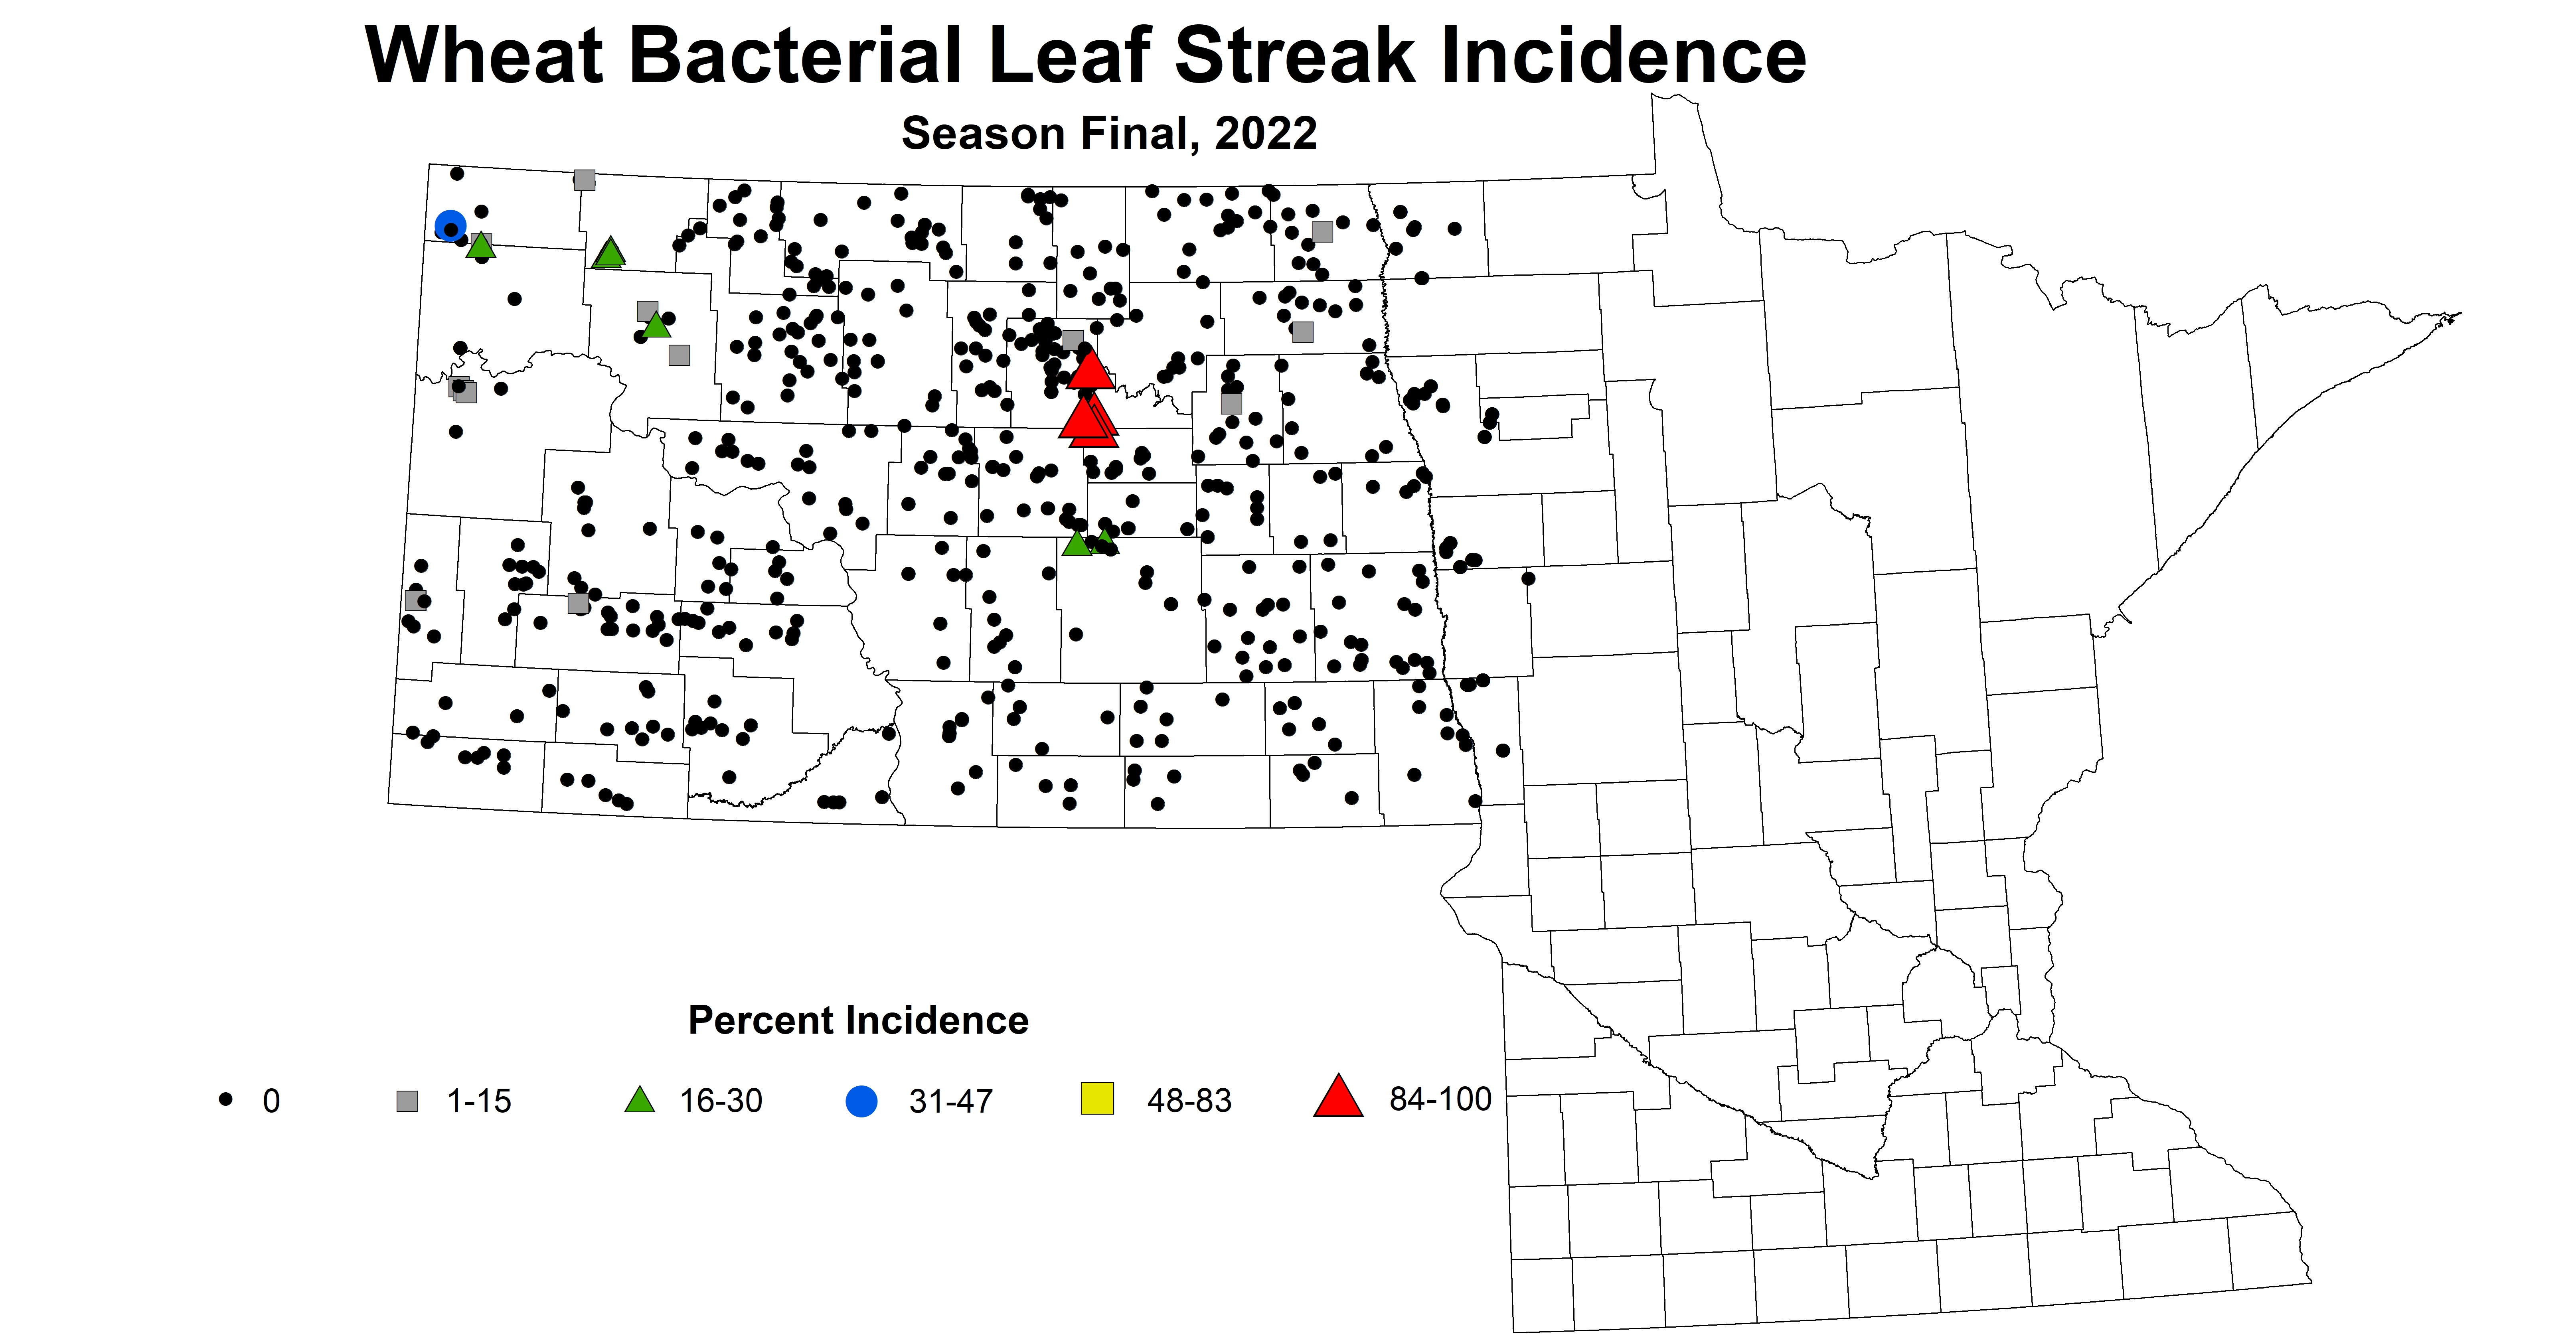 wheat bacterial leaf streak incidence 2022 season final